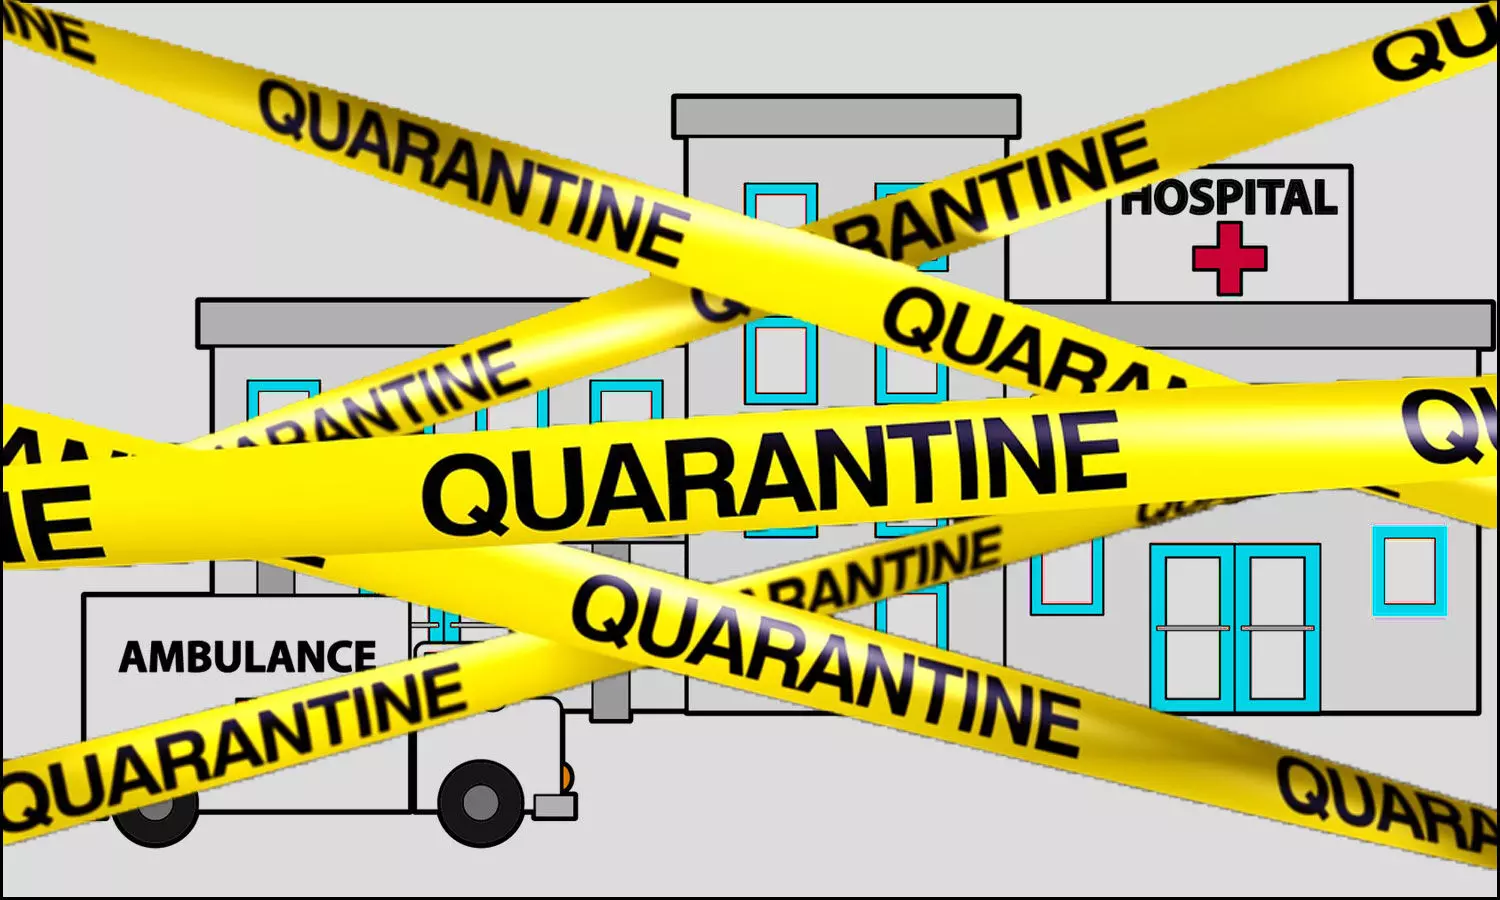 Jhansi gynaecologist begins practice breaking quarantine - Entire nursing home sealed; staff, patients quarantined